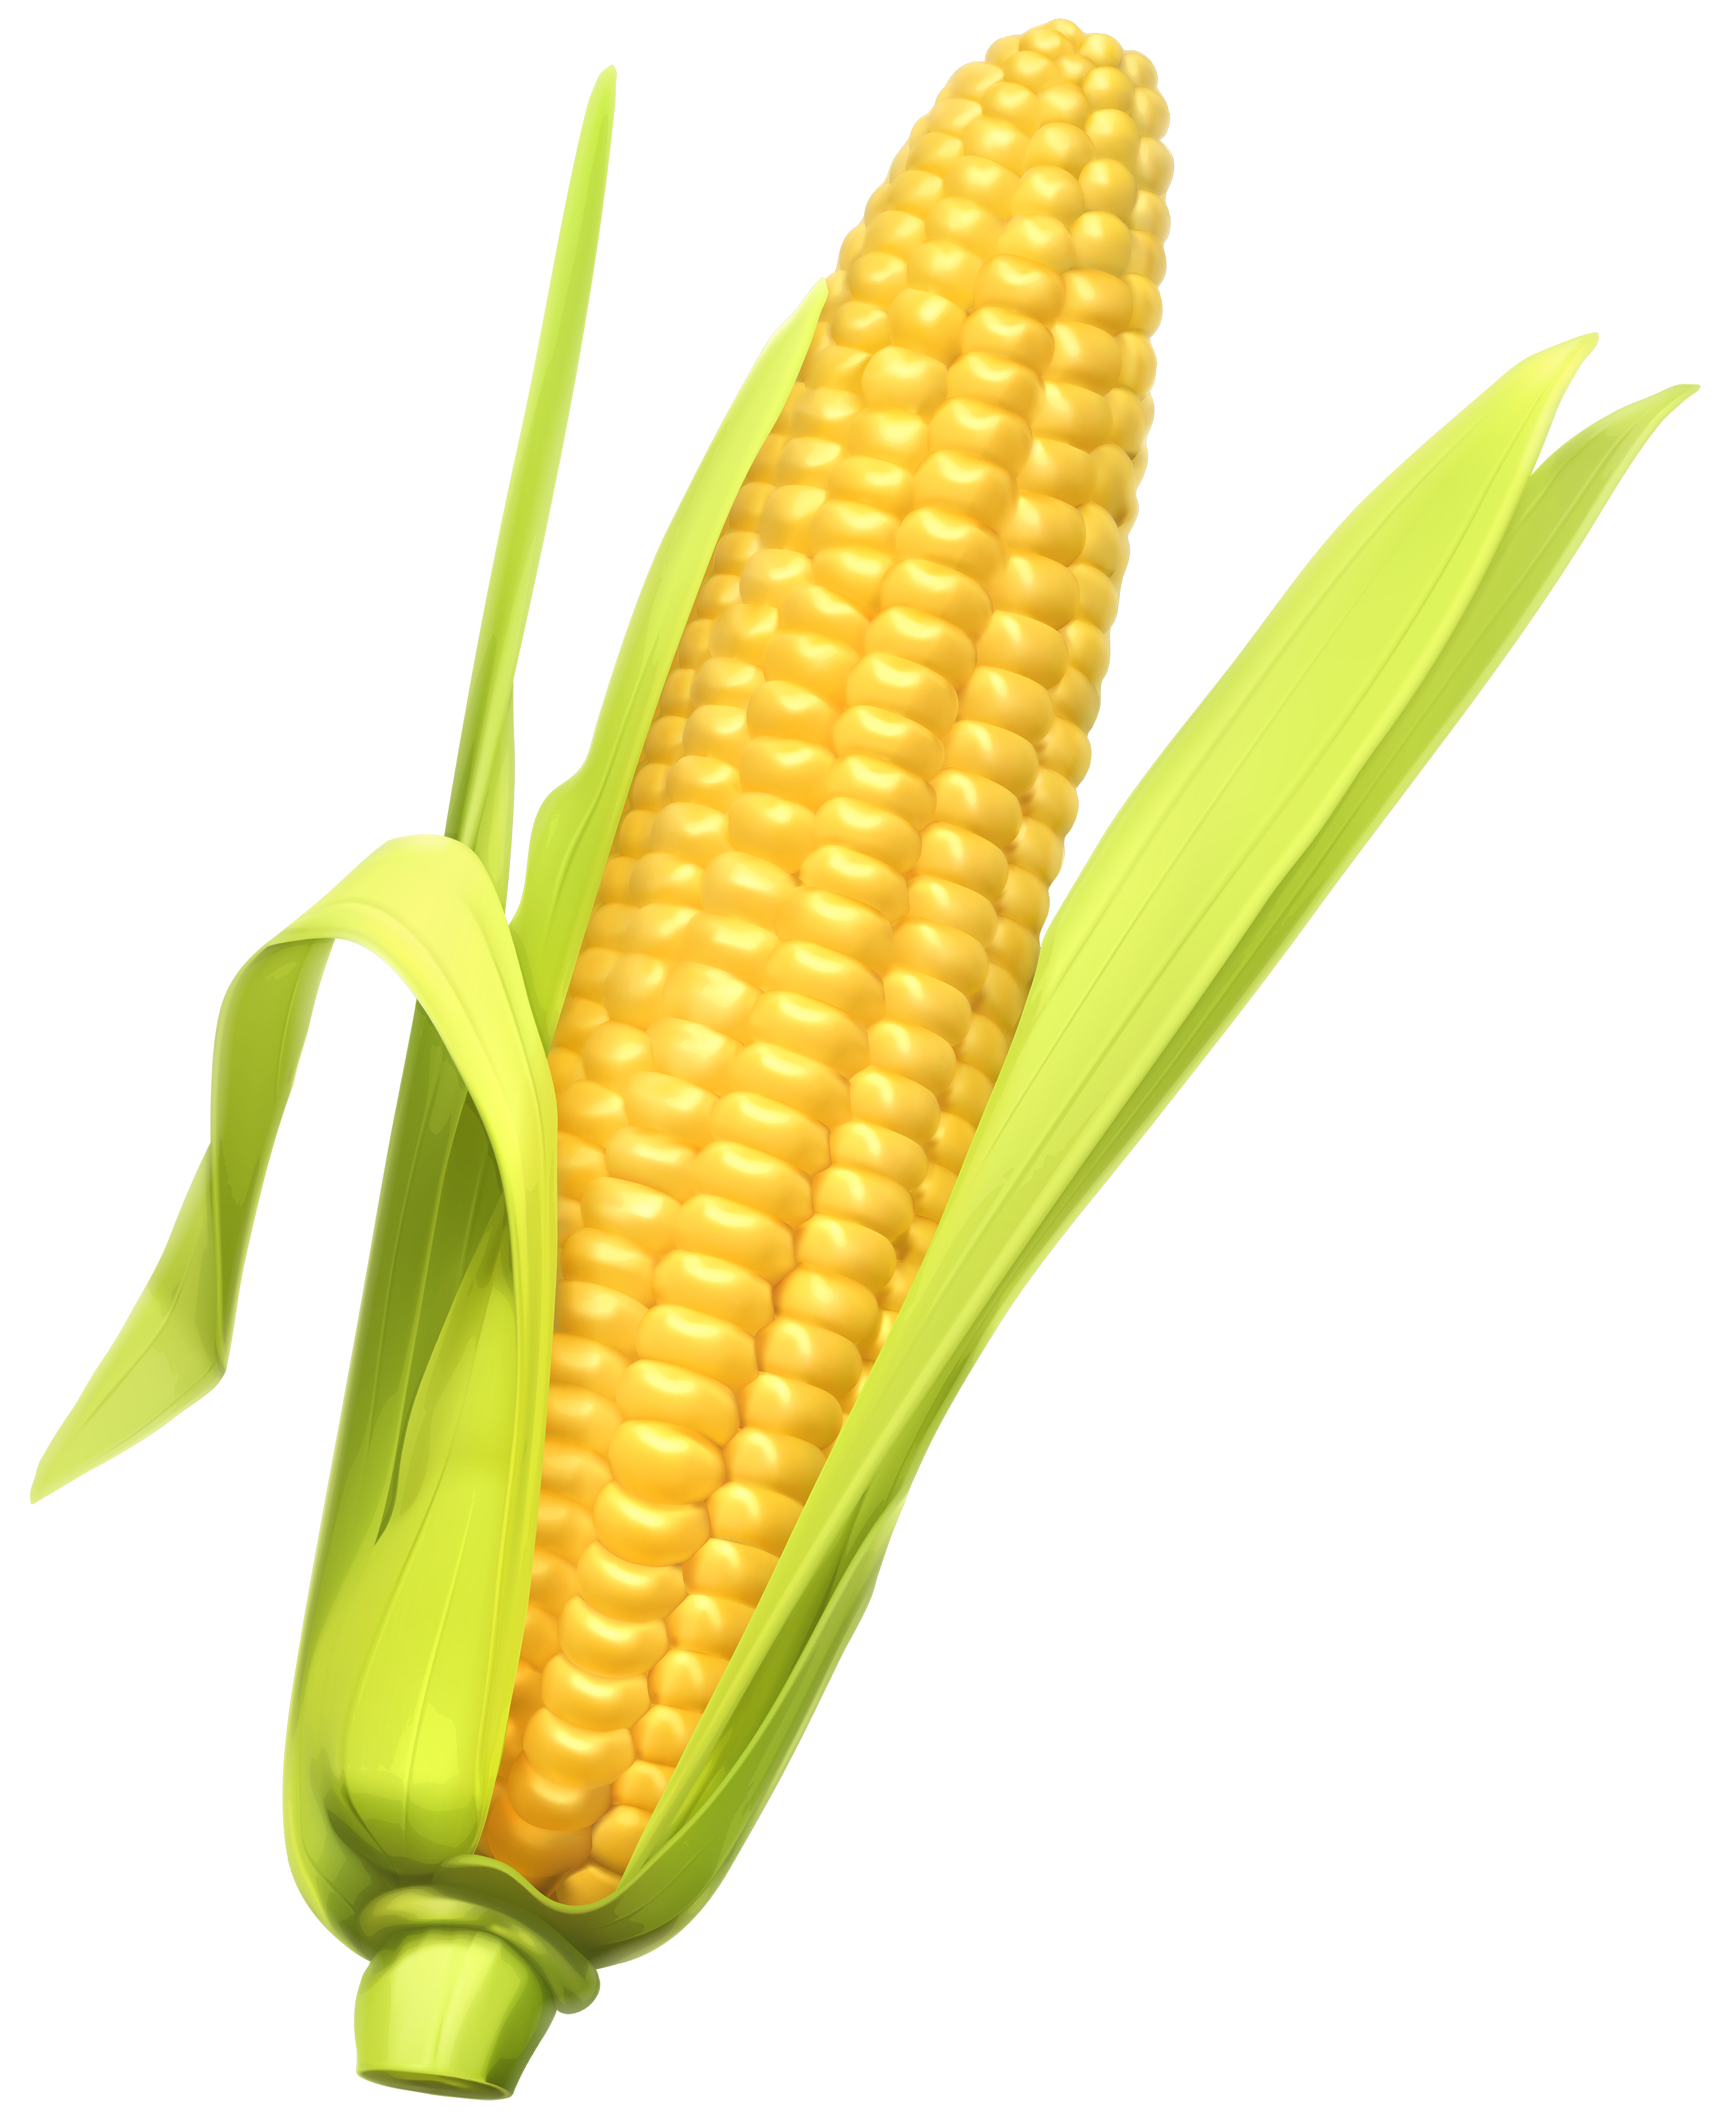 Pin by marija on. Grain clipart corn grain